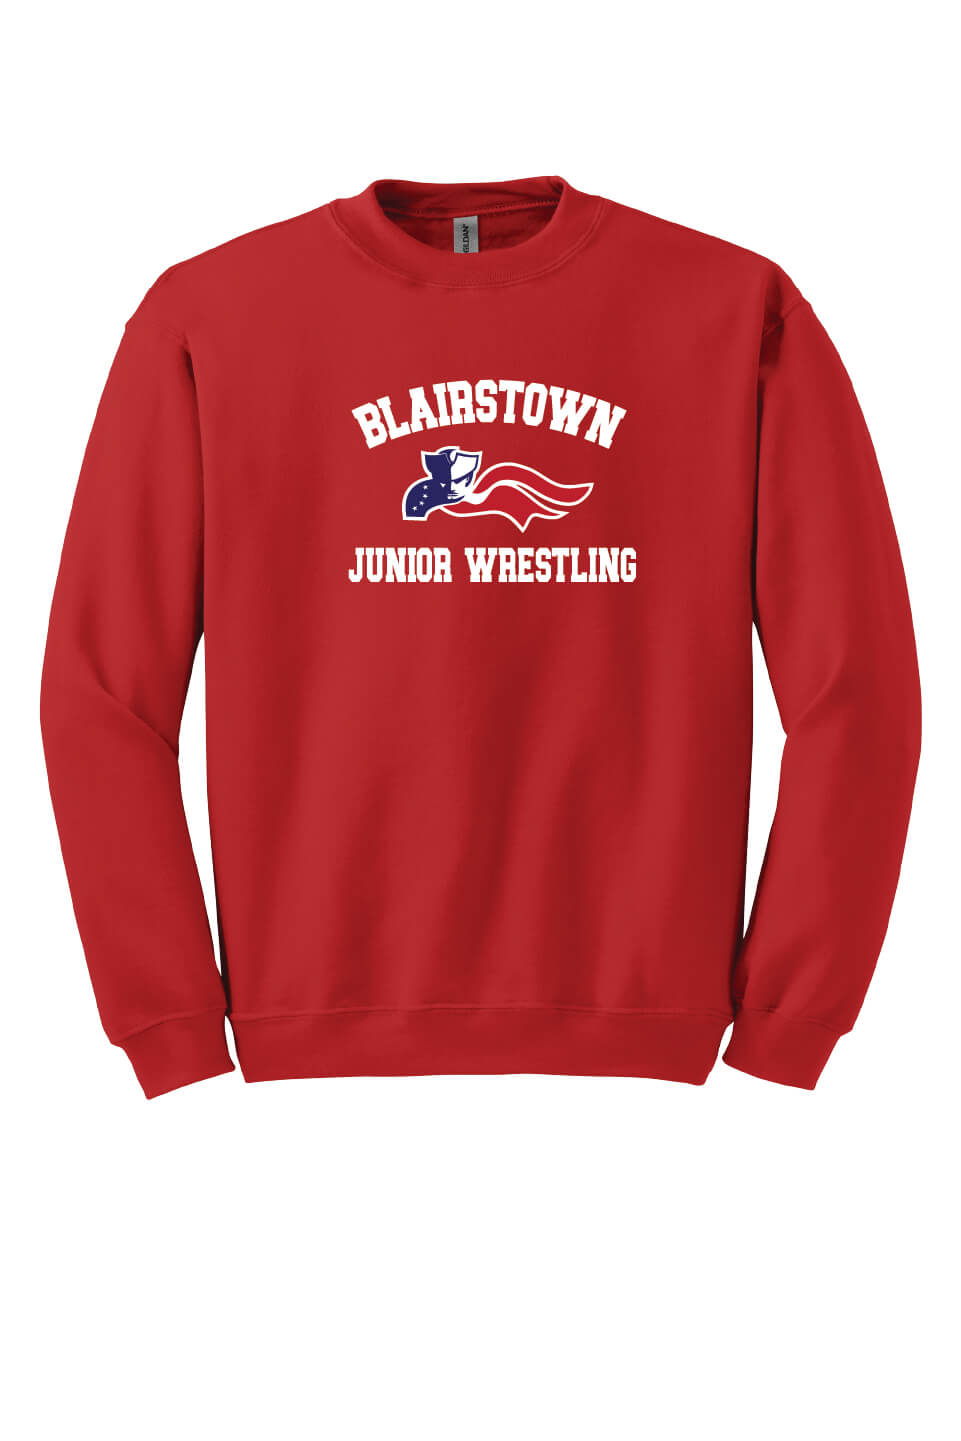 Blairstown JR Wrestling Crewneck Sweatshirt (Youth) red